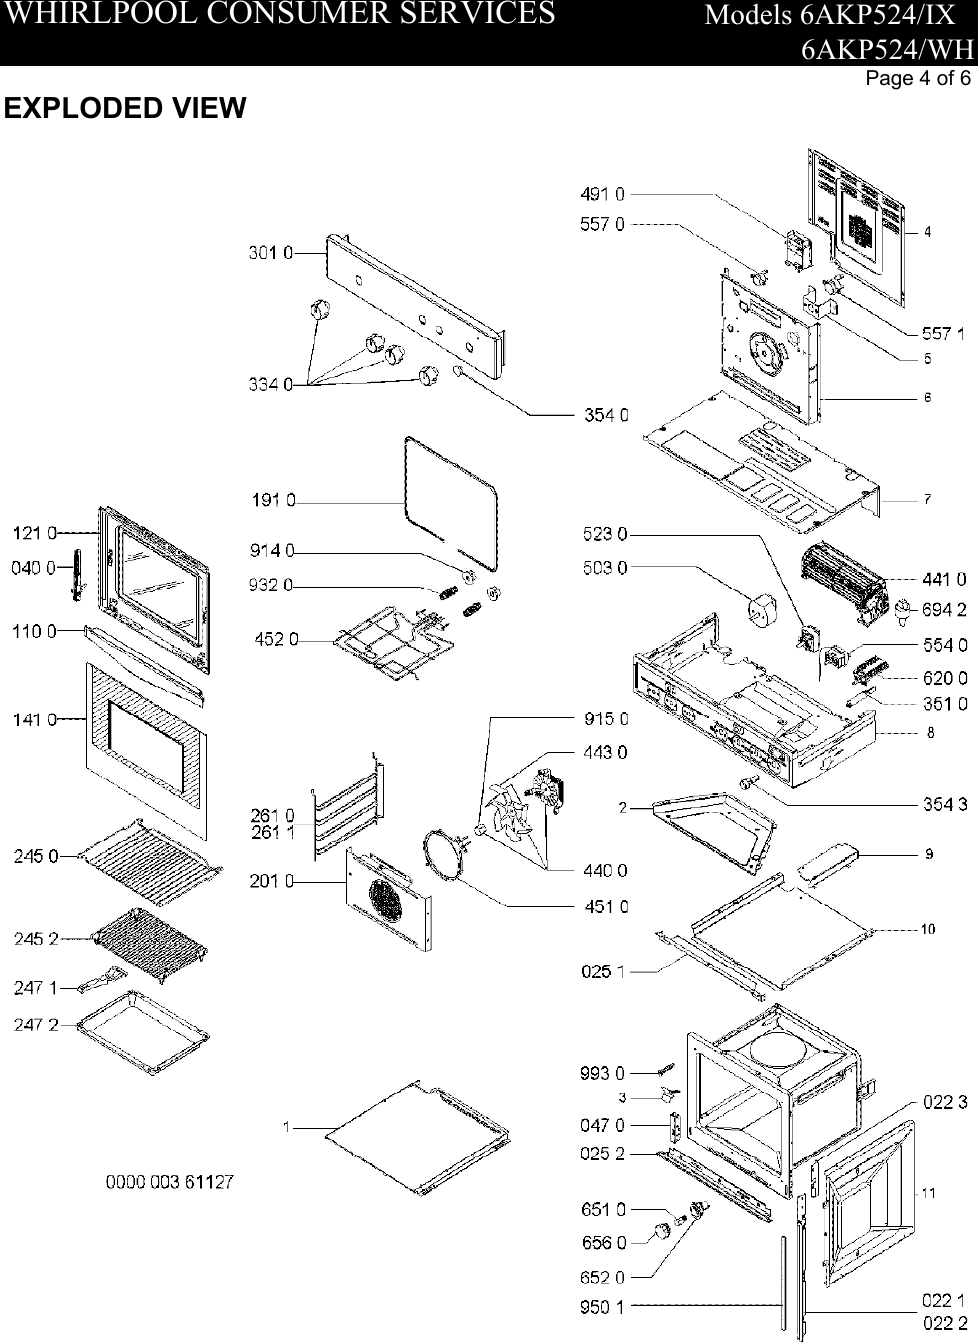 Page 4 of 6 - Whirlpool Whirlpool-Whirlpool-Oven-6Akp524-Ix-Users-Manual SM5530